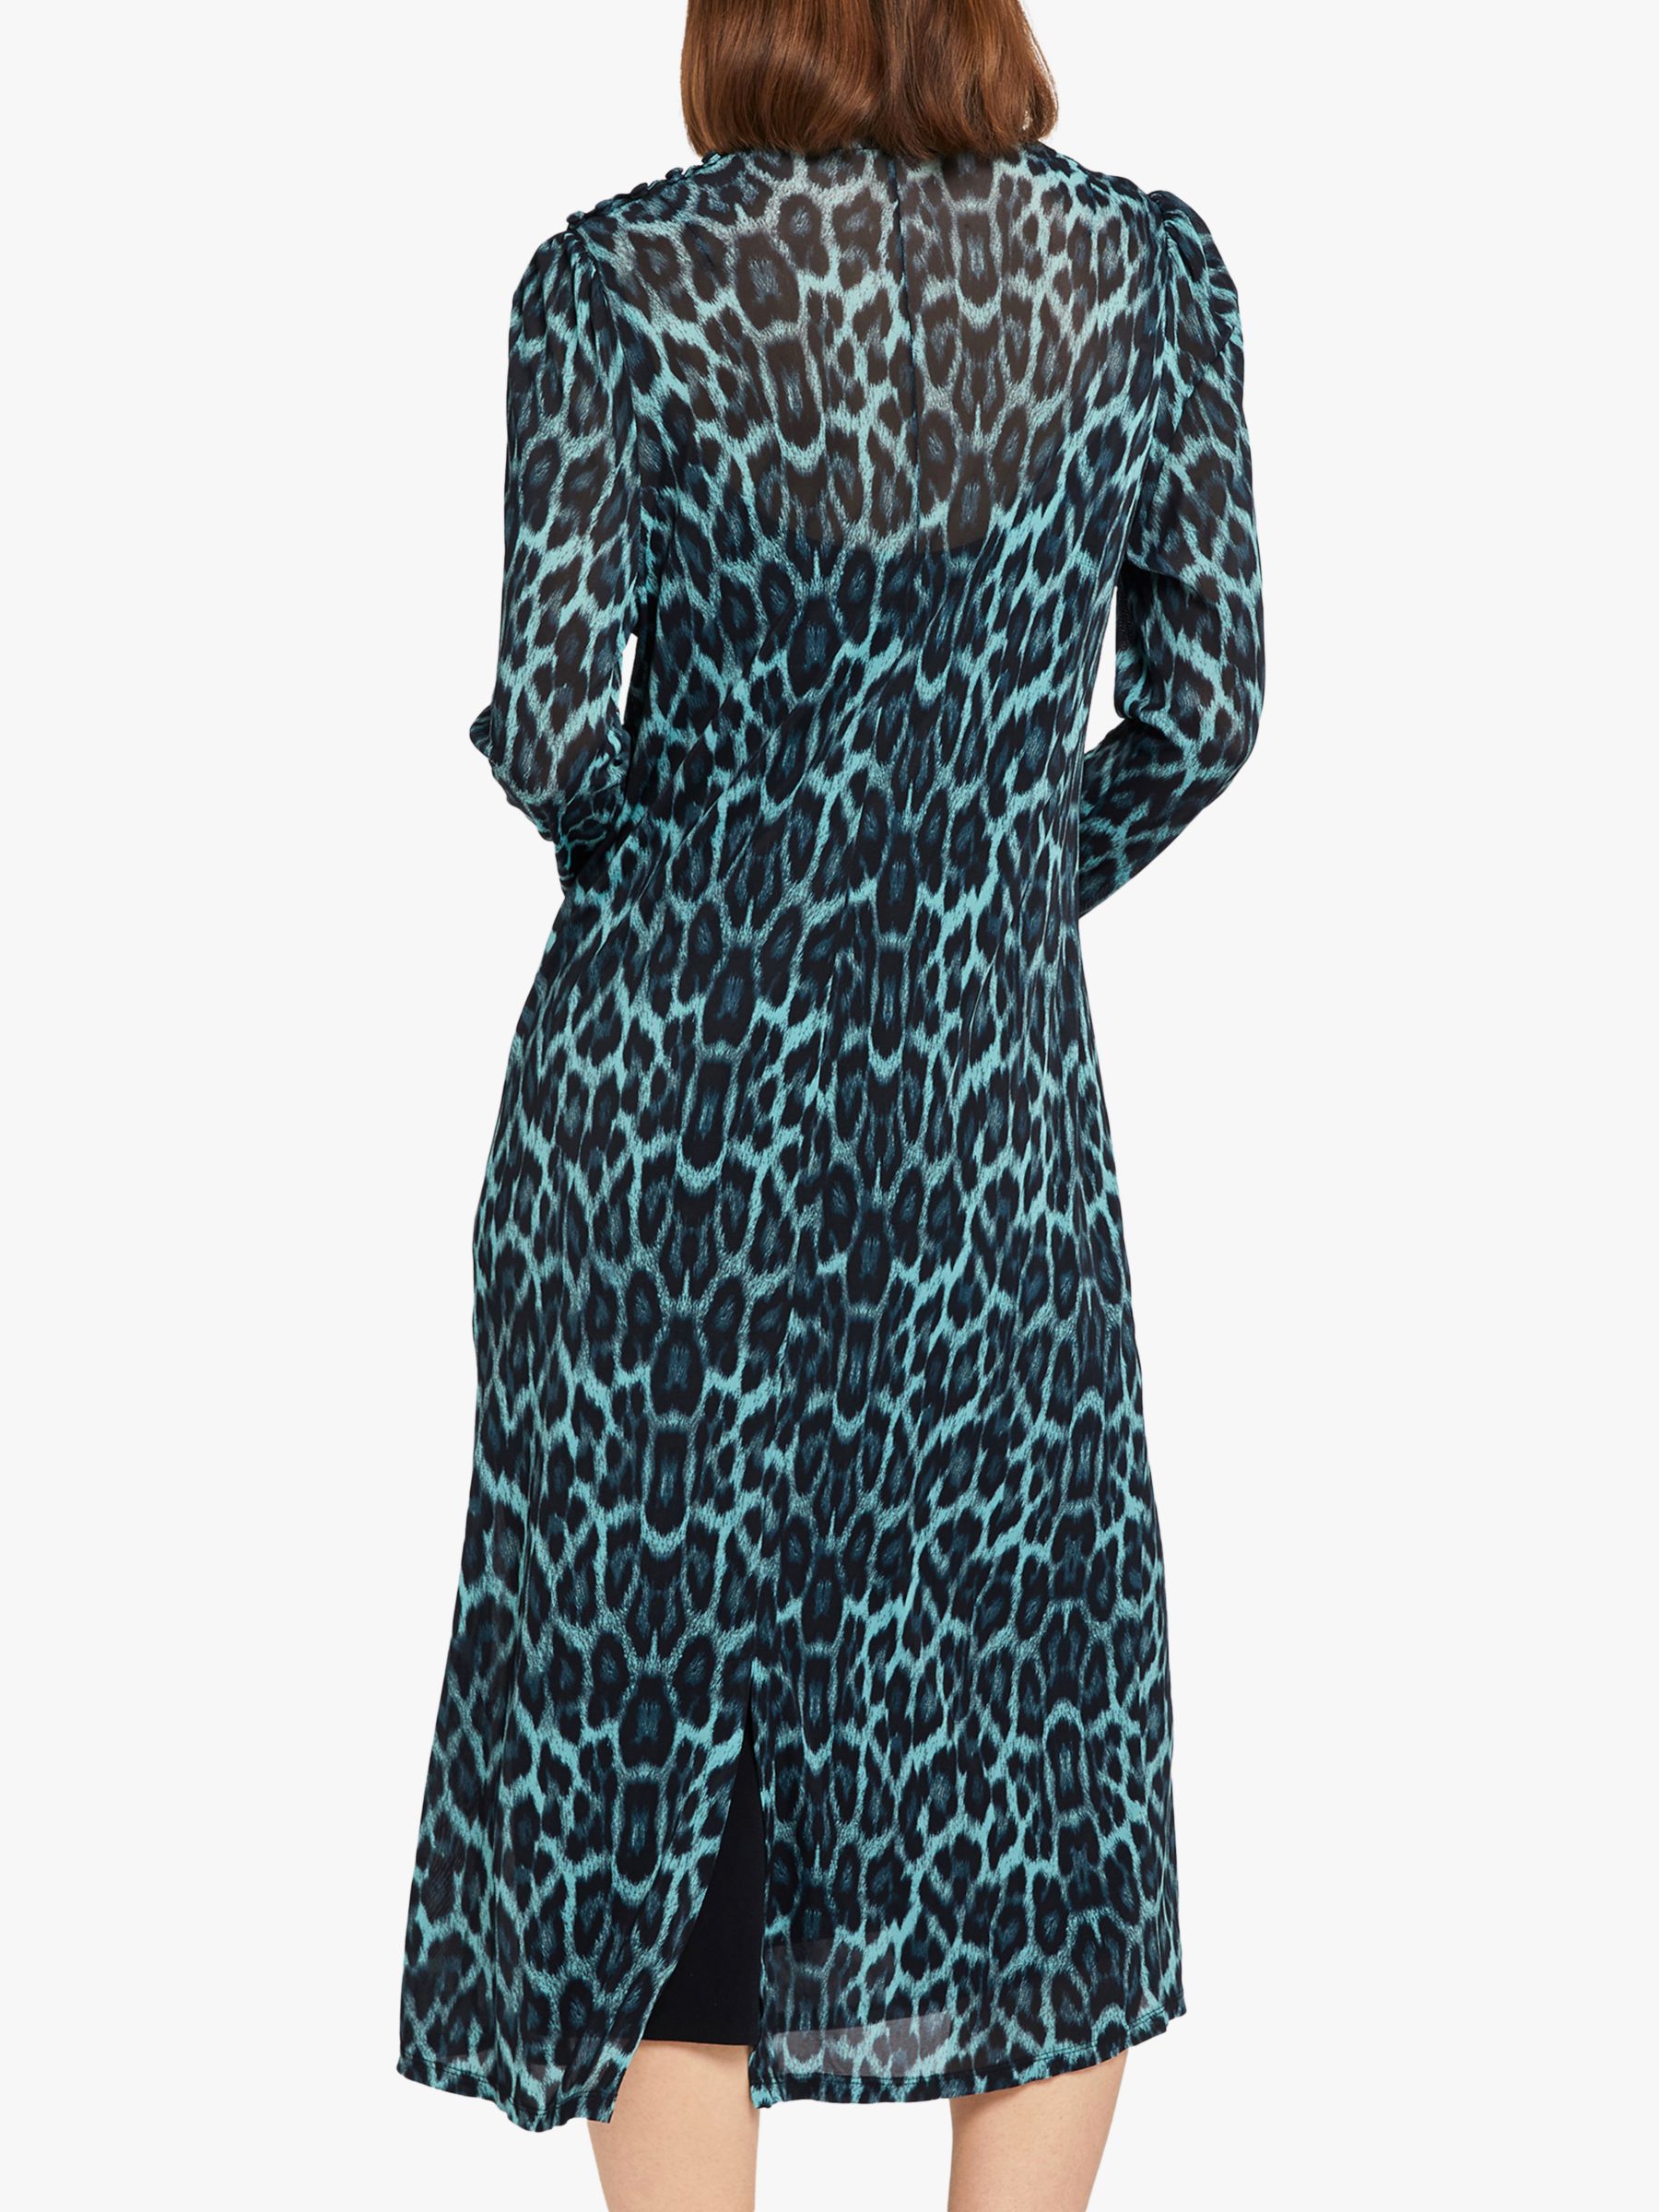 Ghost Nadia Dress, Blue Leopard at John 